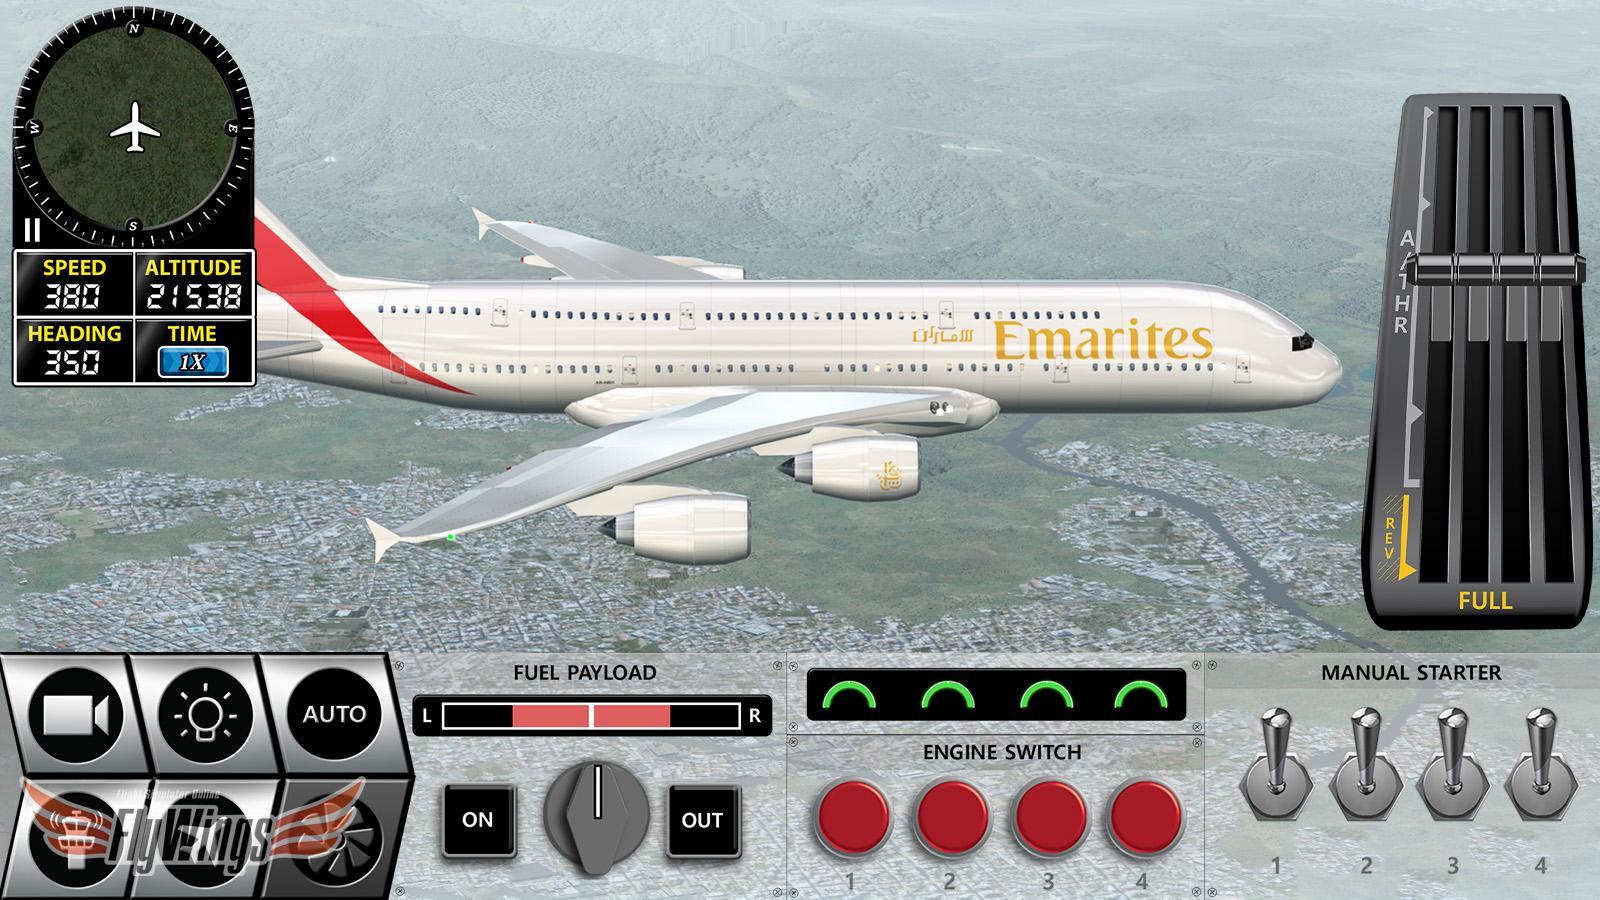 Flight Simulator 2016 Flywings For Android Apk Download - 2016 flight simulator roblox